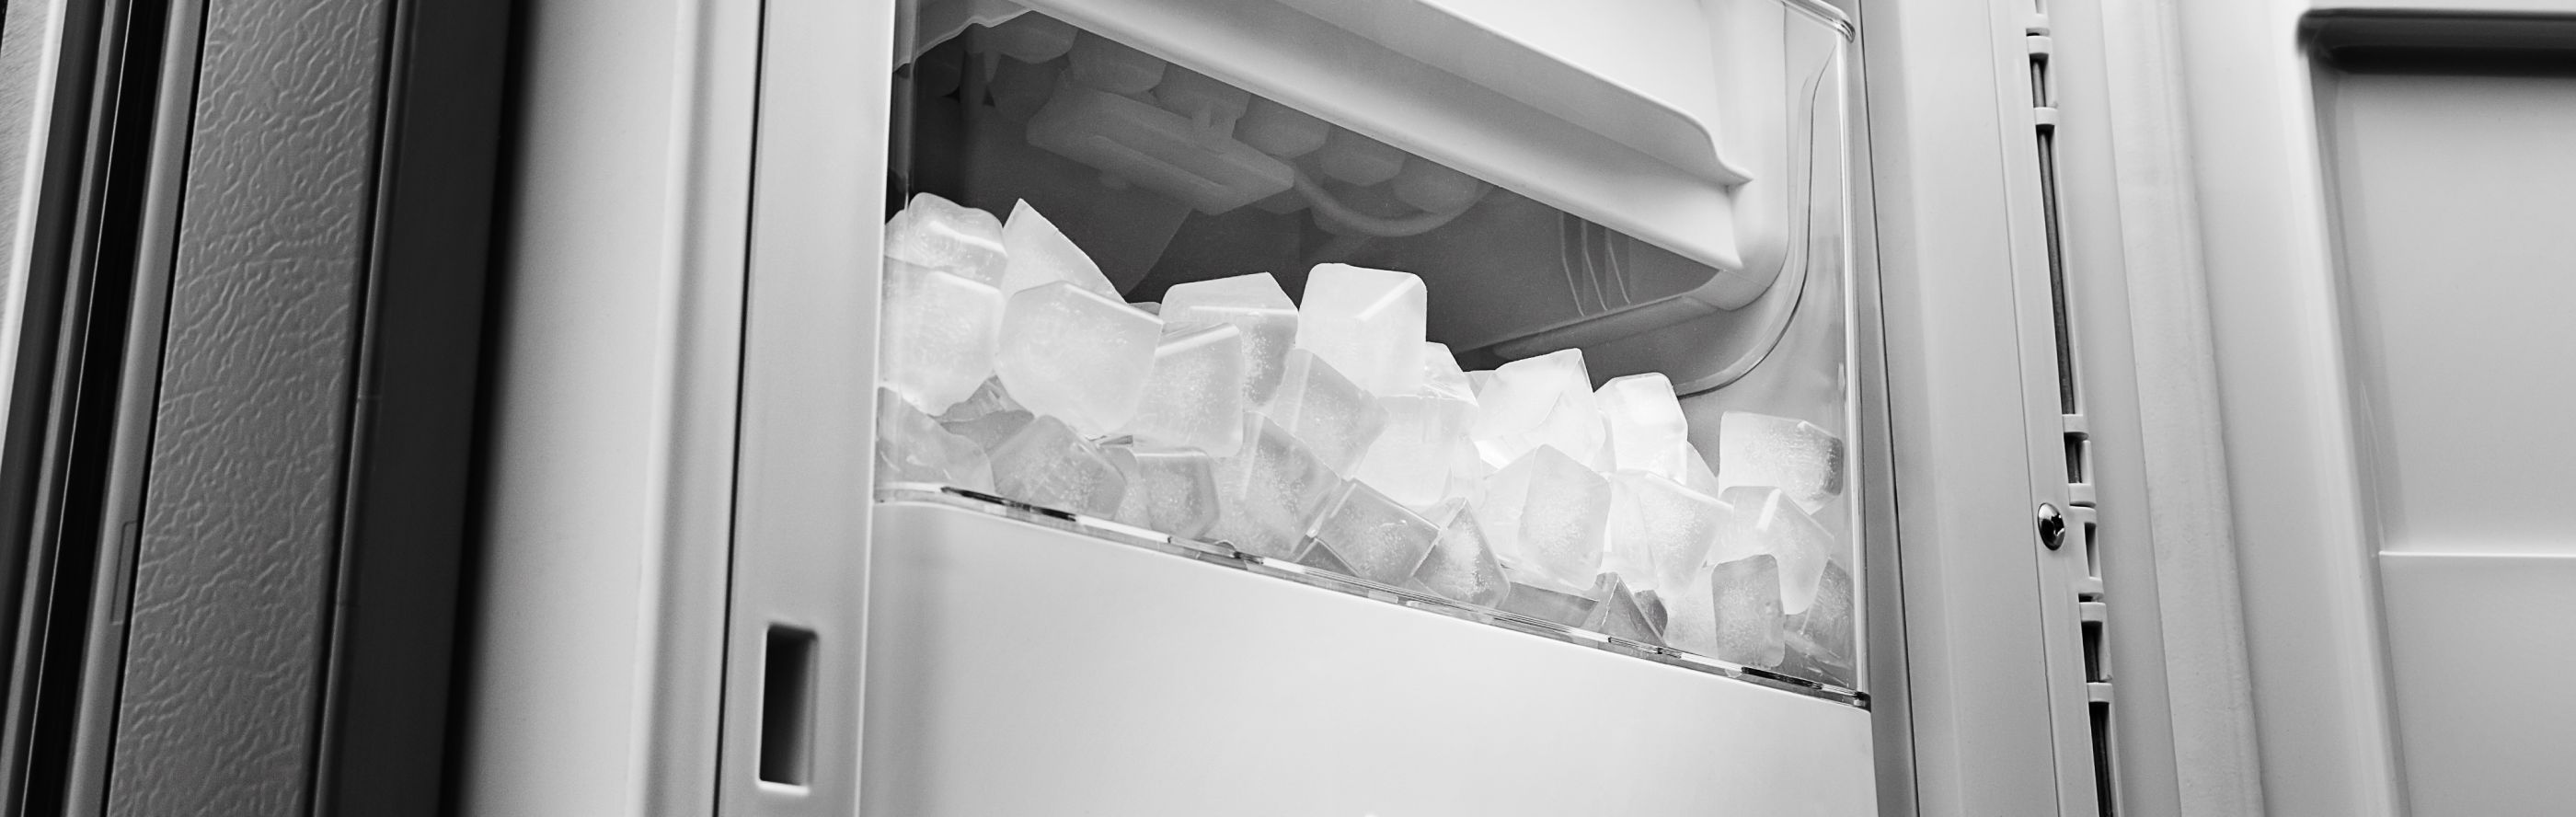 Full ice bin inside refrigerator freezer